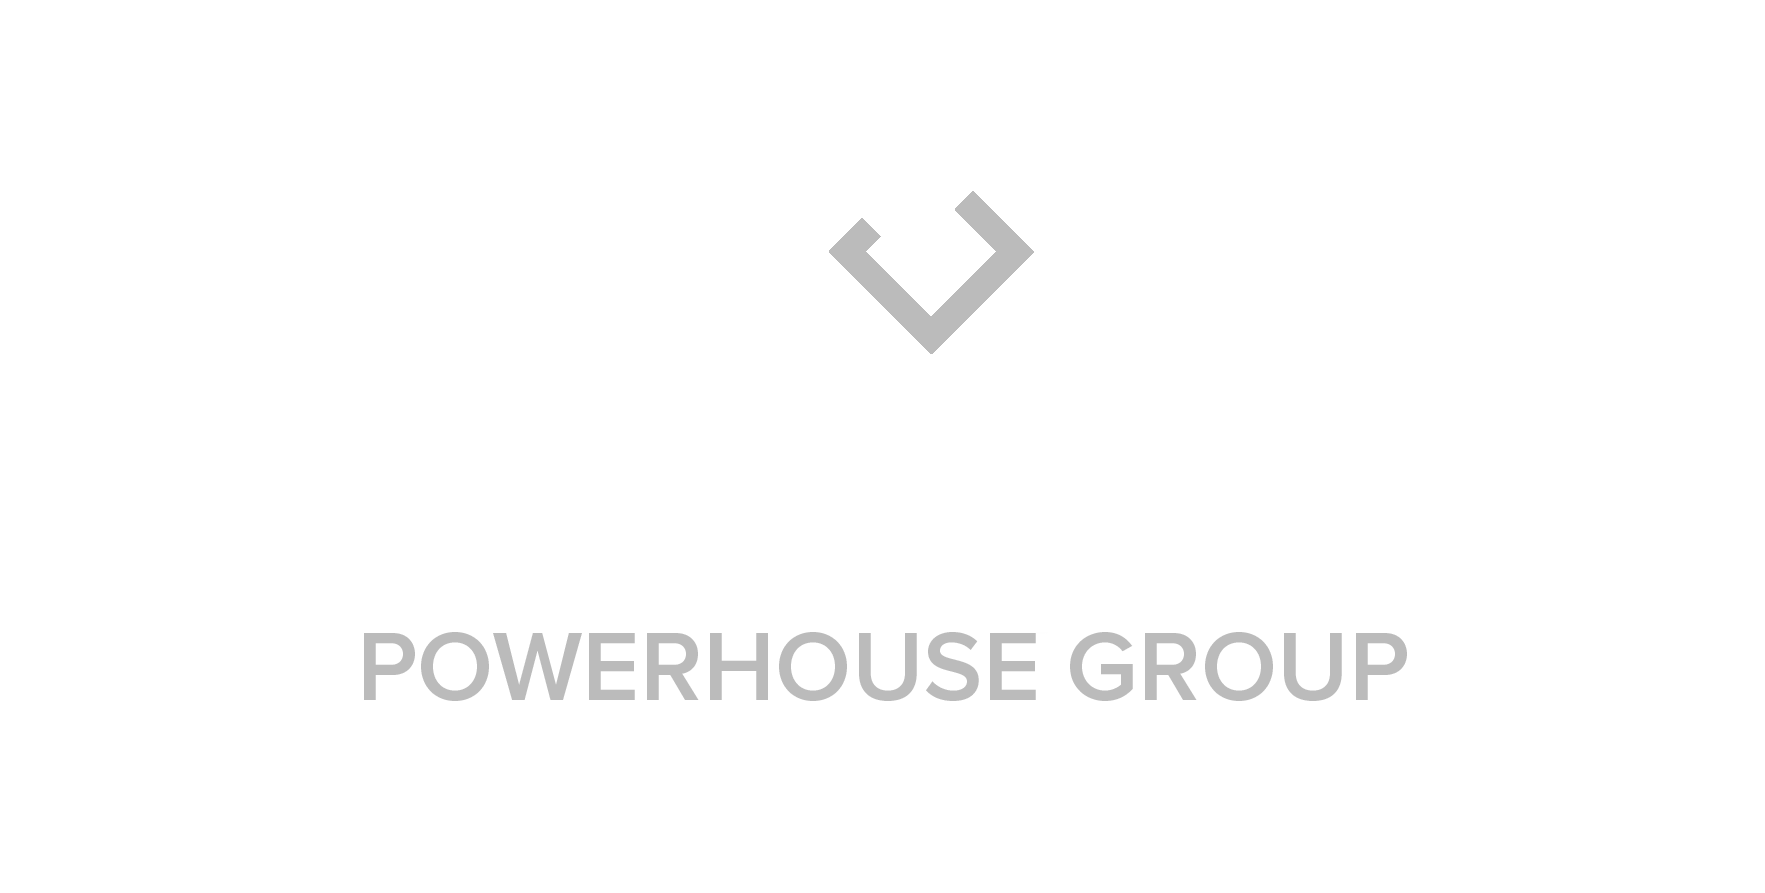 Windermere_Powerhouse_Group-Greyscale